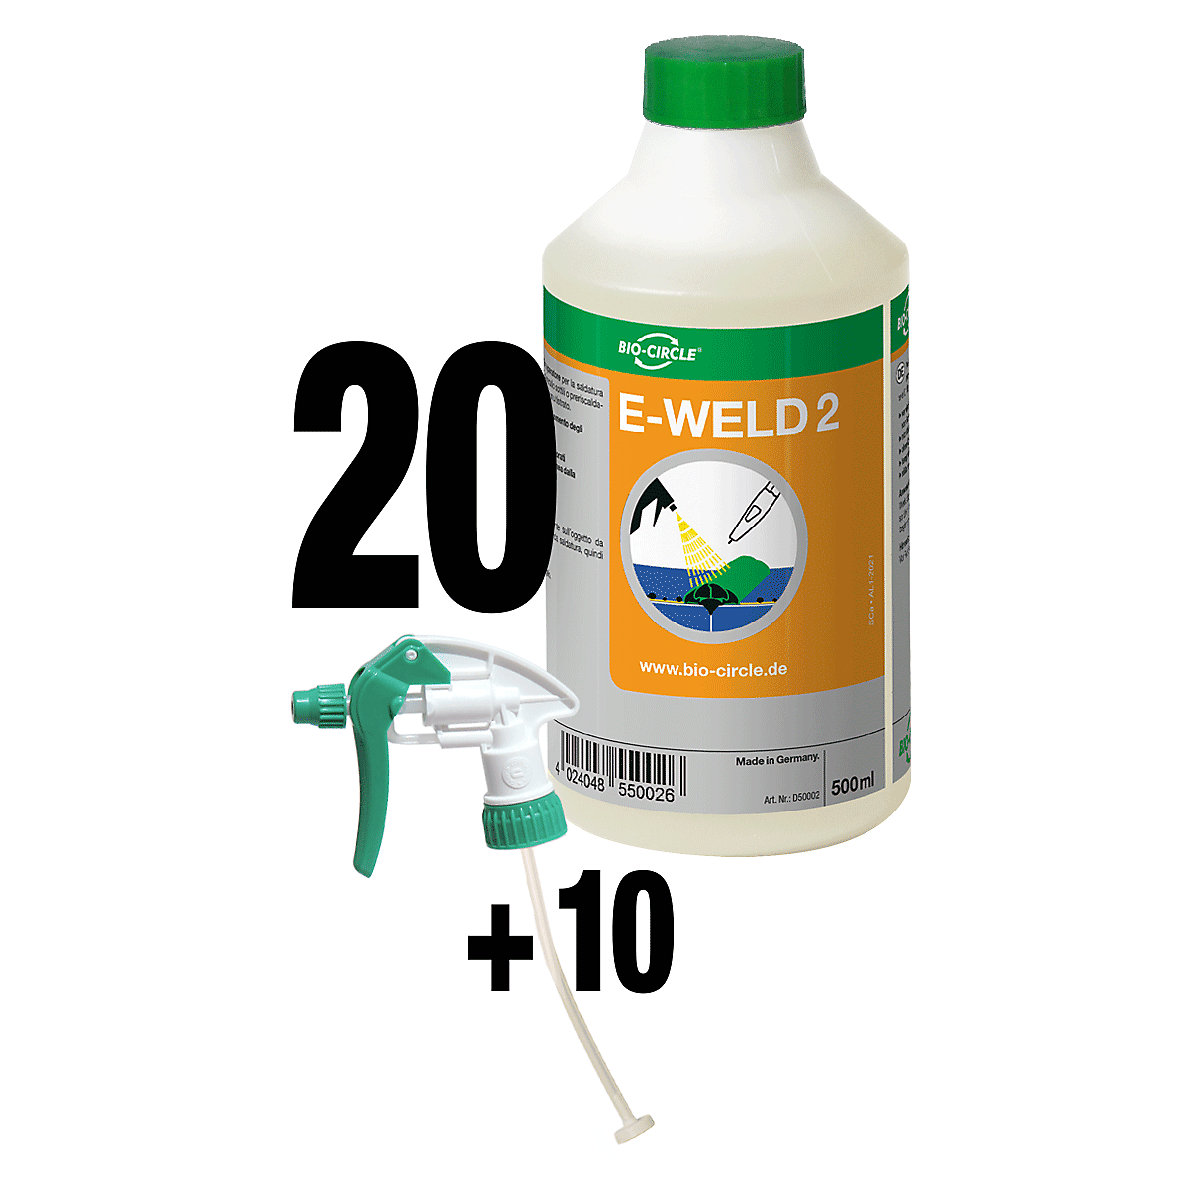 E-WELD 2 welding protection spray – Bio-Circle